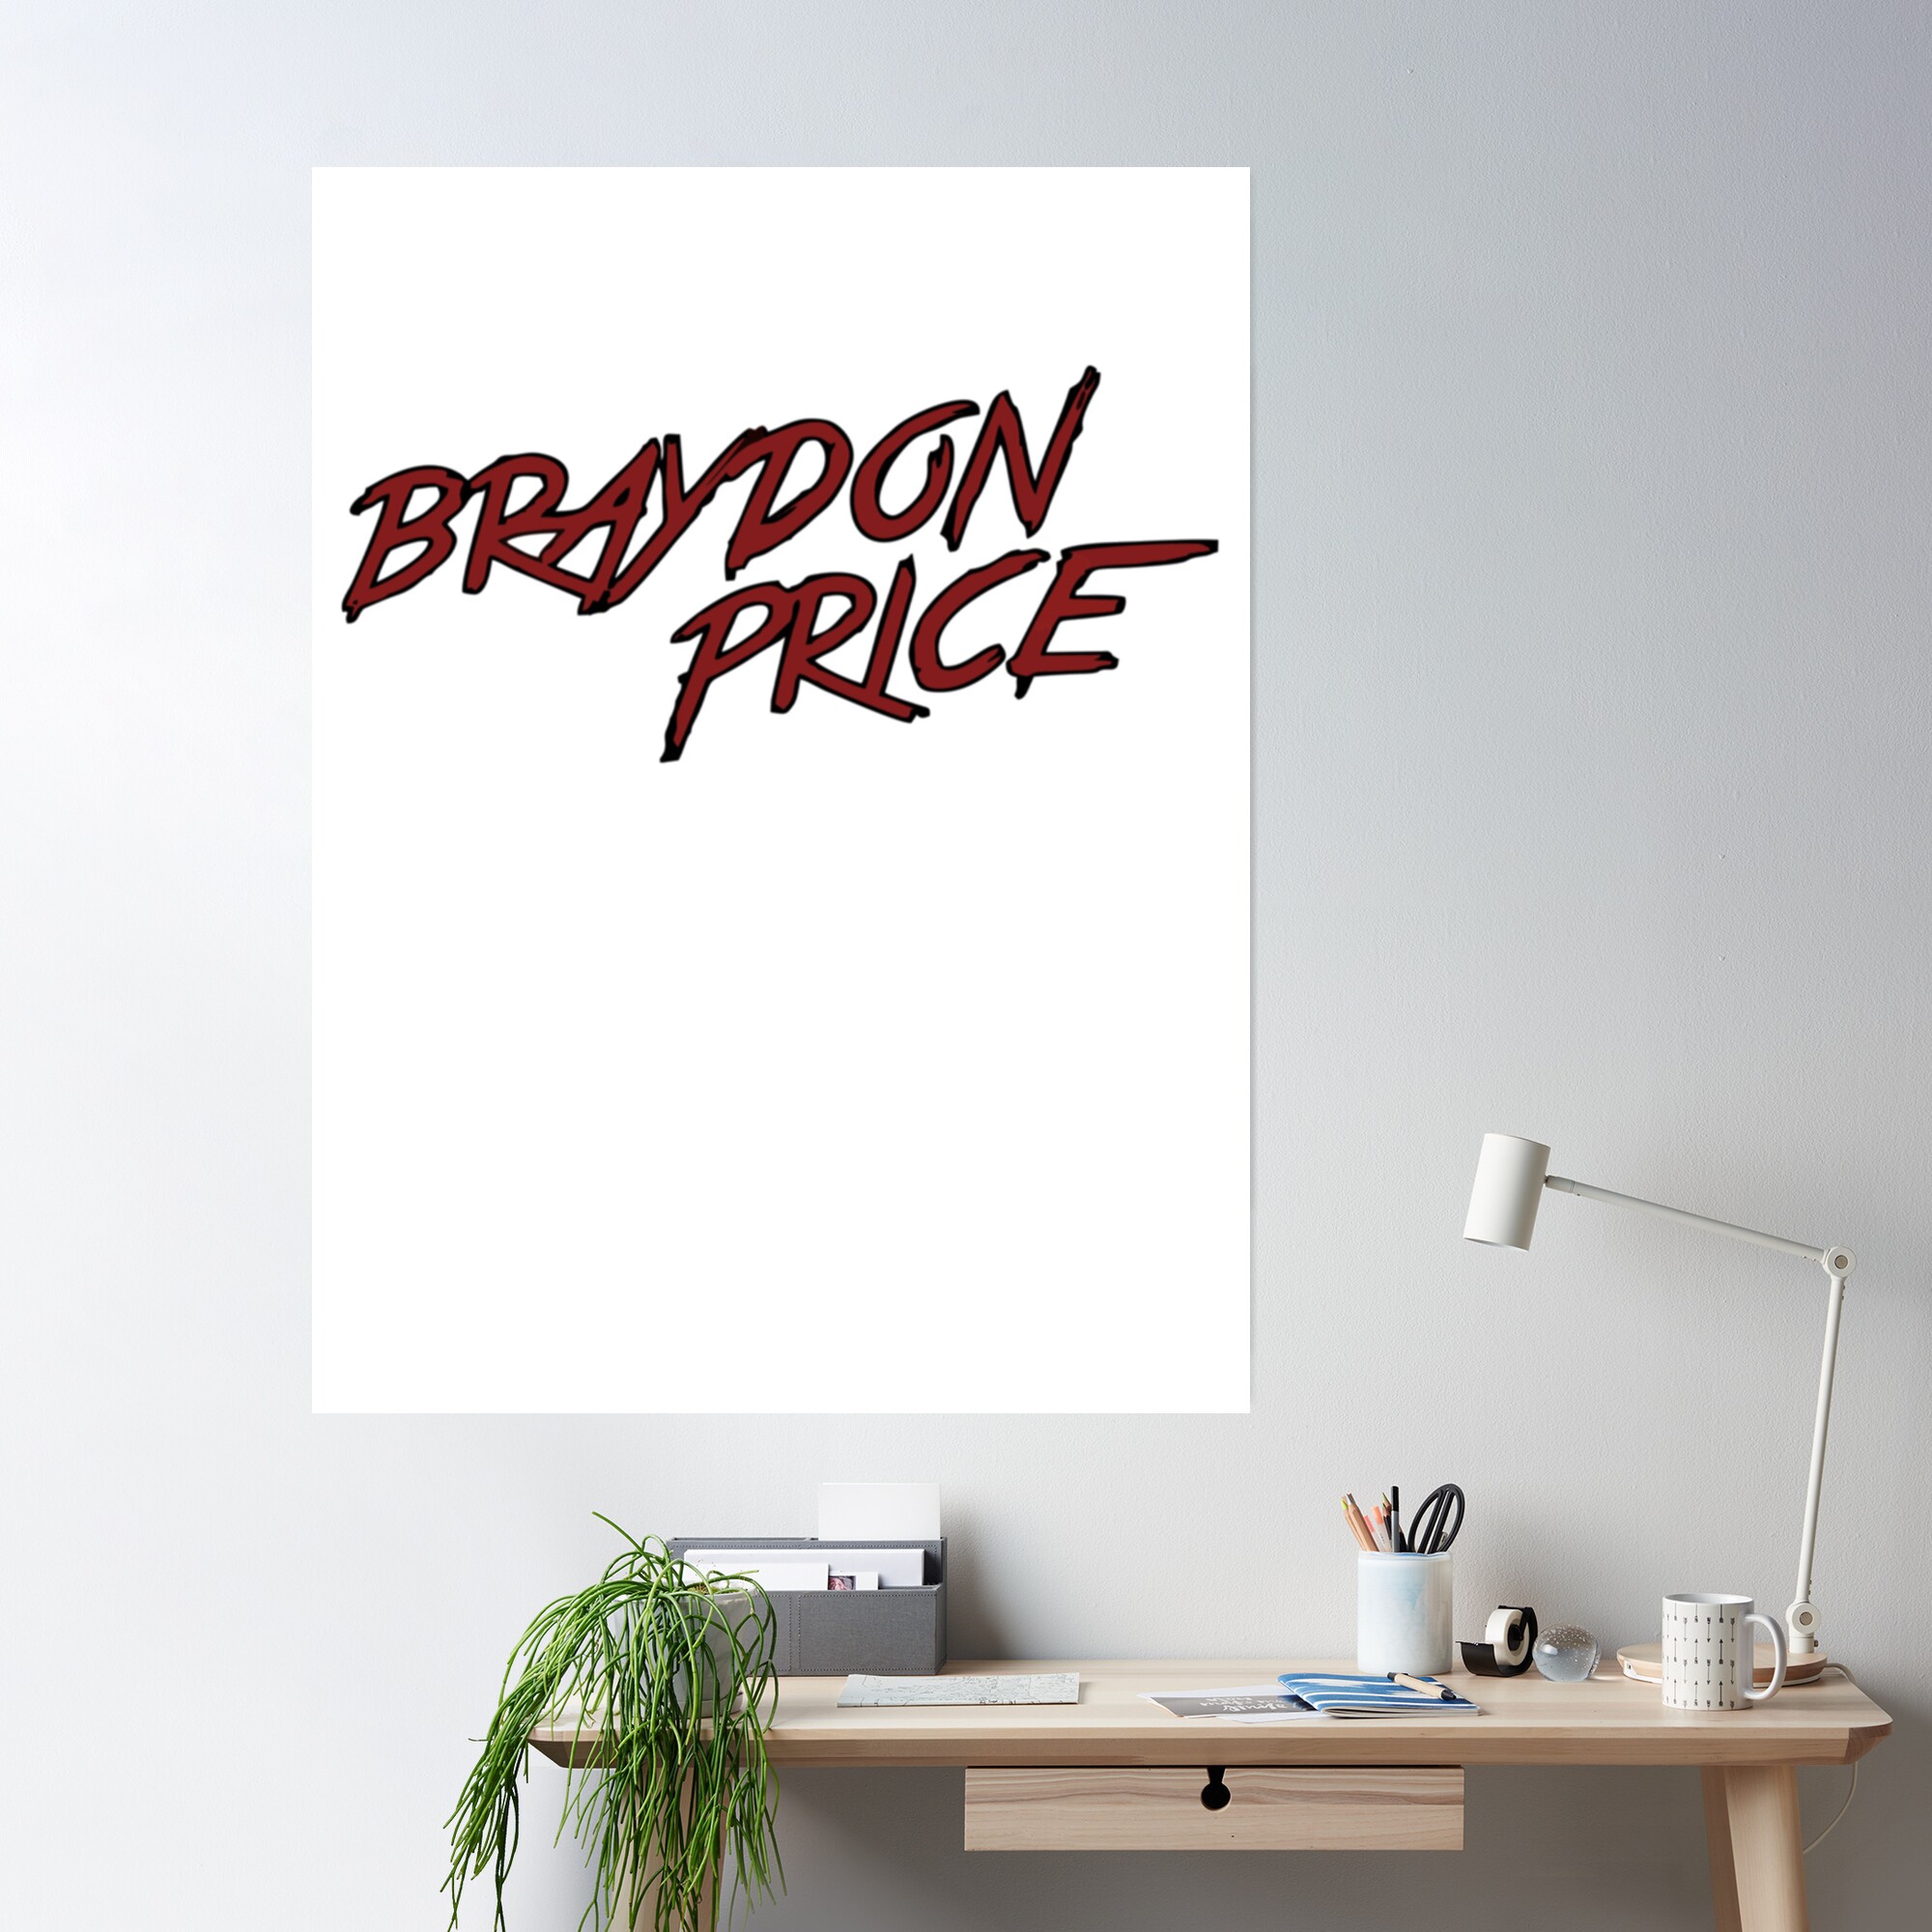 cposterlargesquare product2000x2000 9 - Braydon Price Store